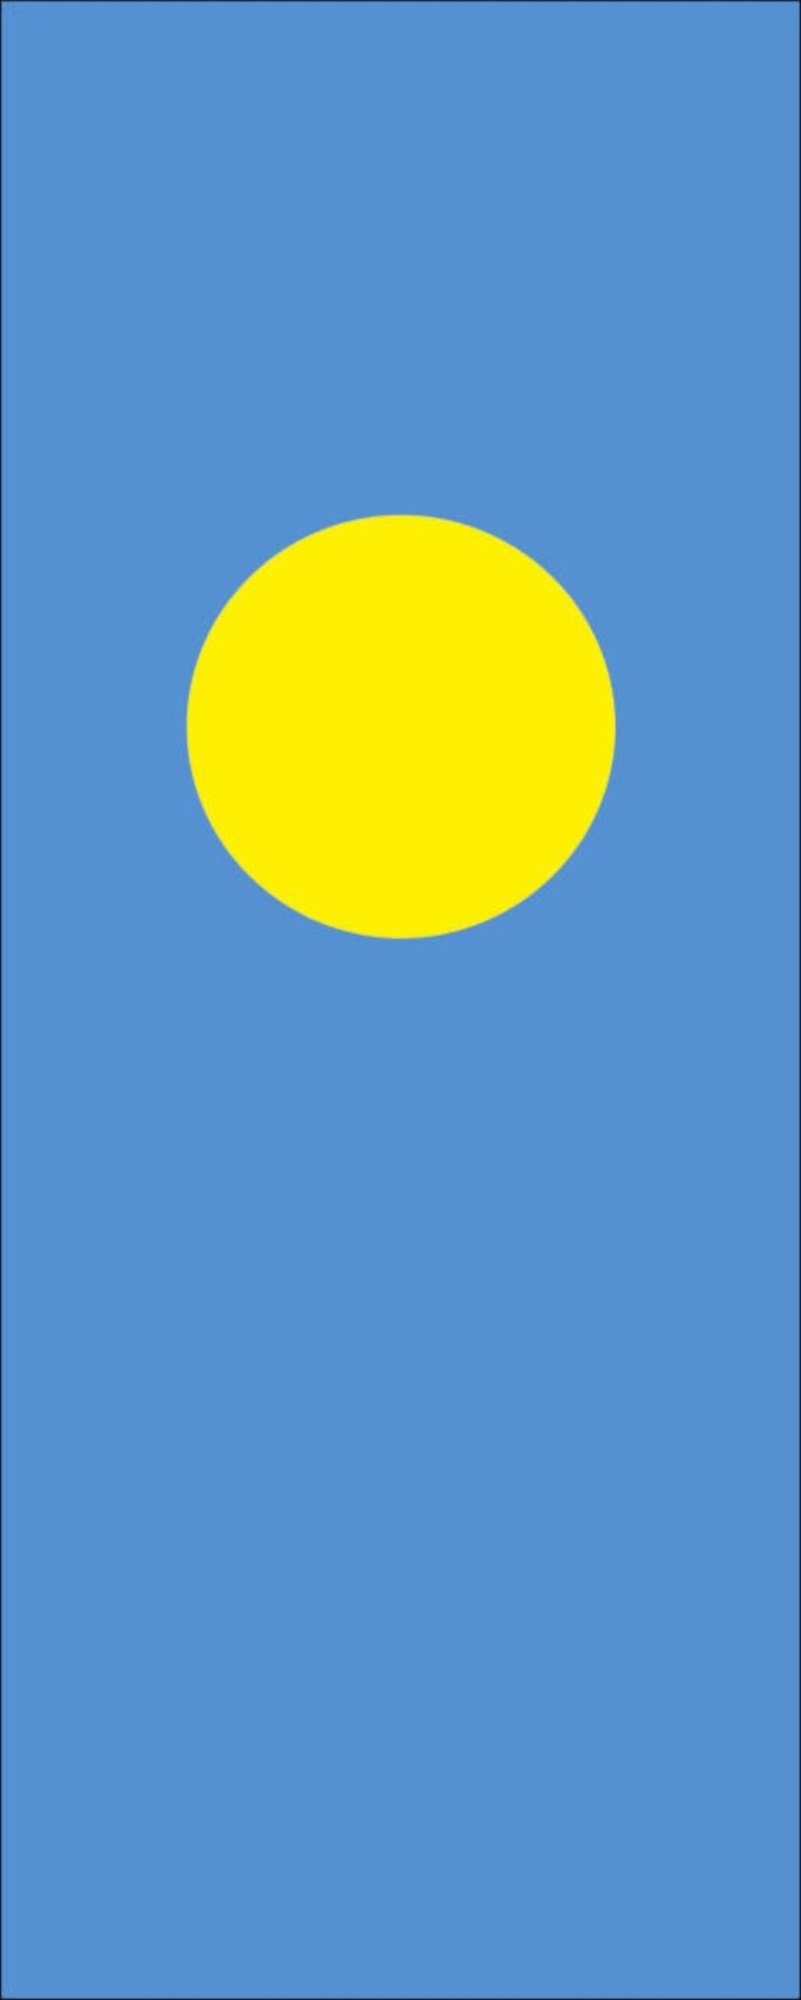 flaggenmeer g/m² 110 Palau Flagge Flagge Hochformat